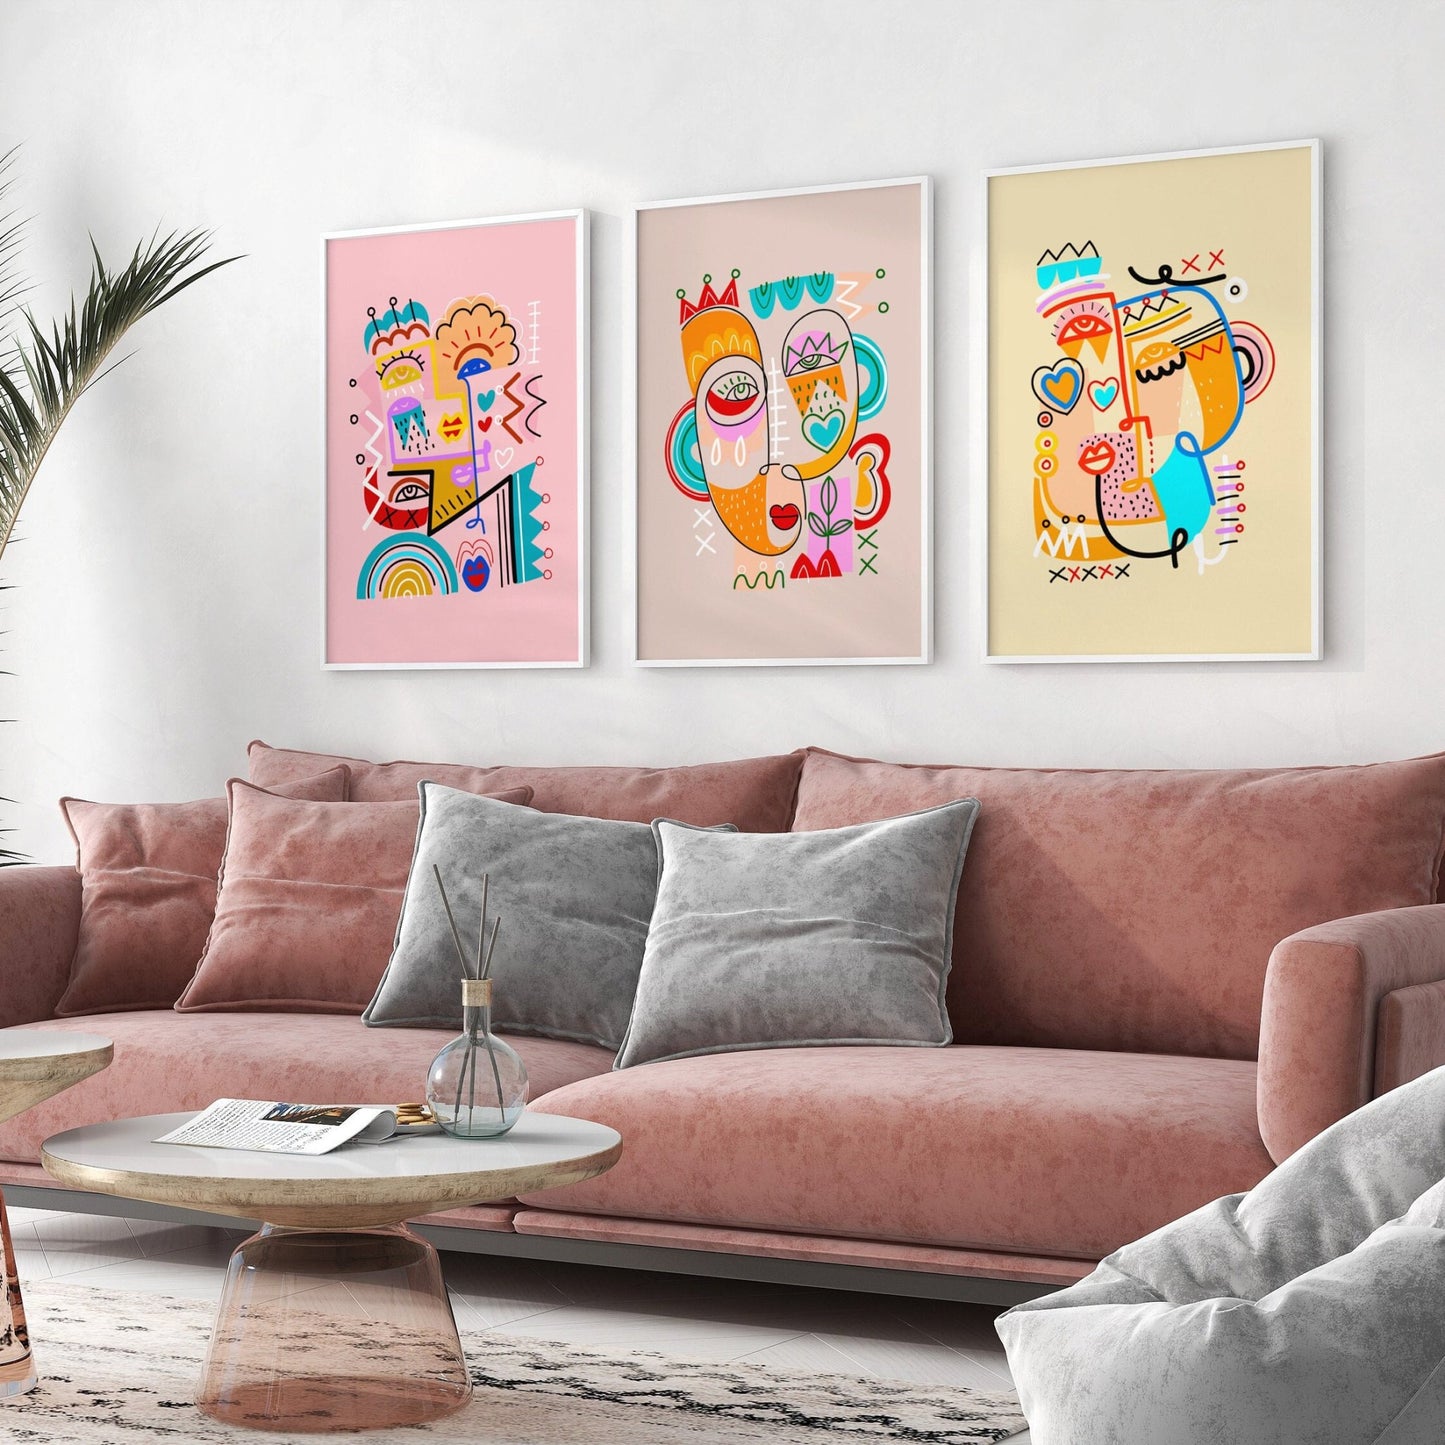 Set of 3 Colourful Abstract Face Prints - Pathos Studio - Art Print Sets